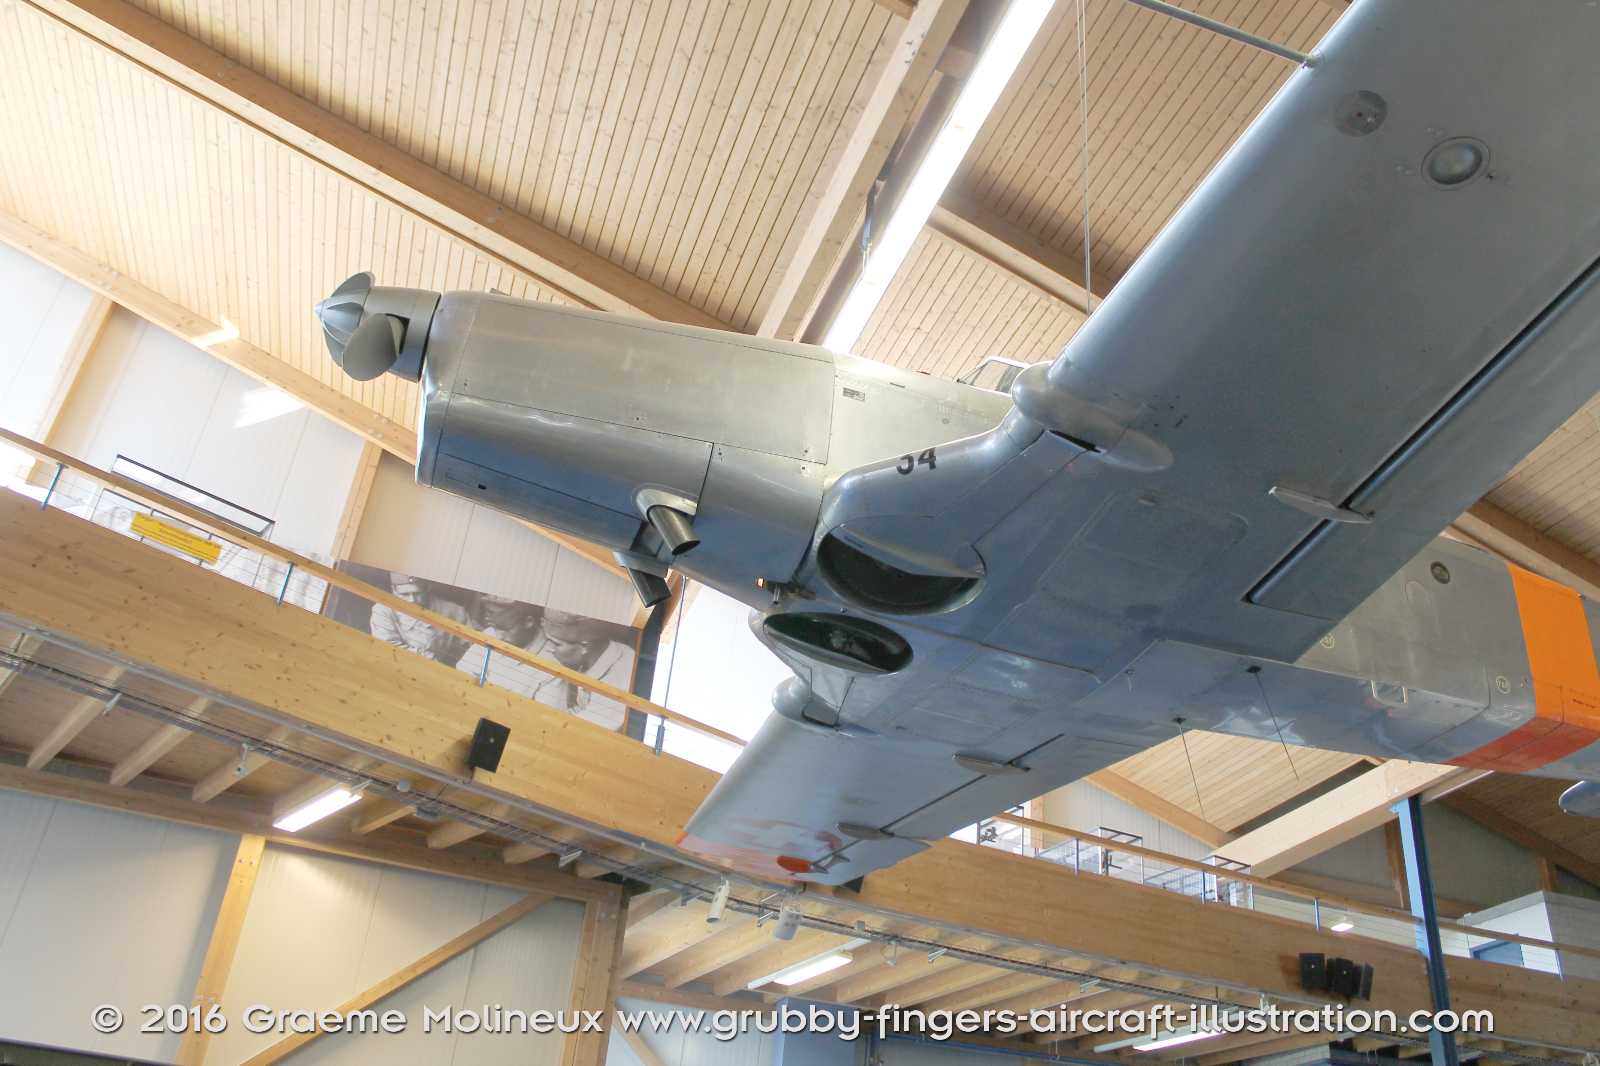 PILATUS_P-2_U-134_Swiss_Air_Force_Museum_2015_12_GrubbyFingers